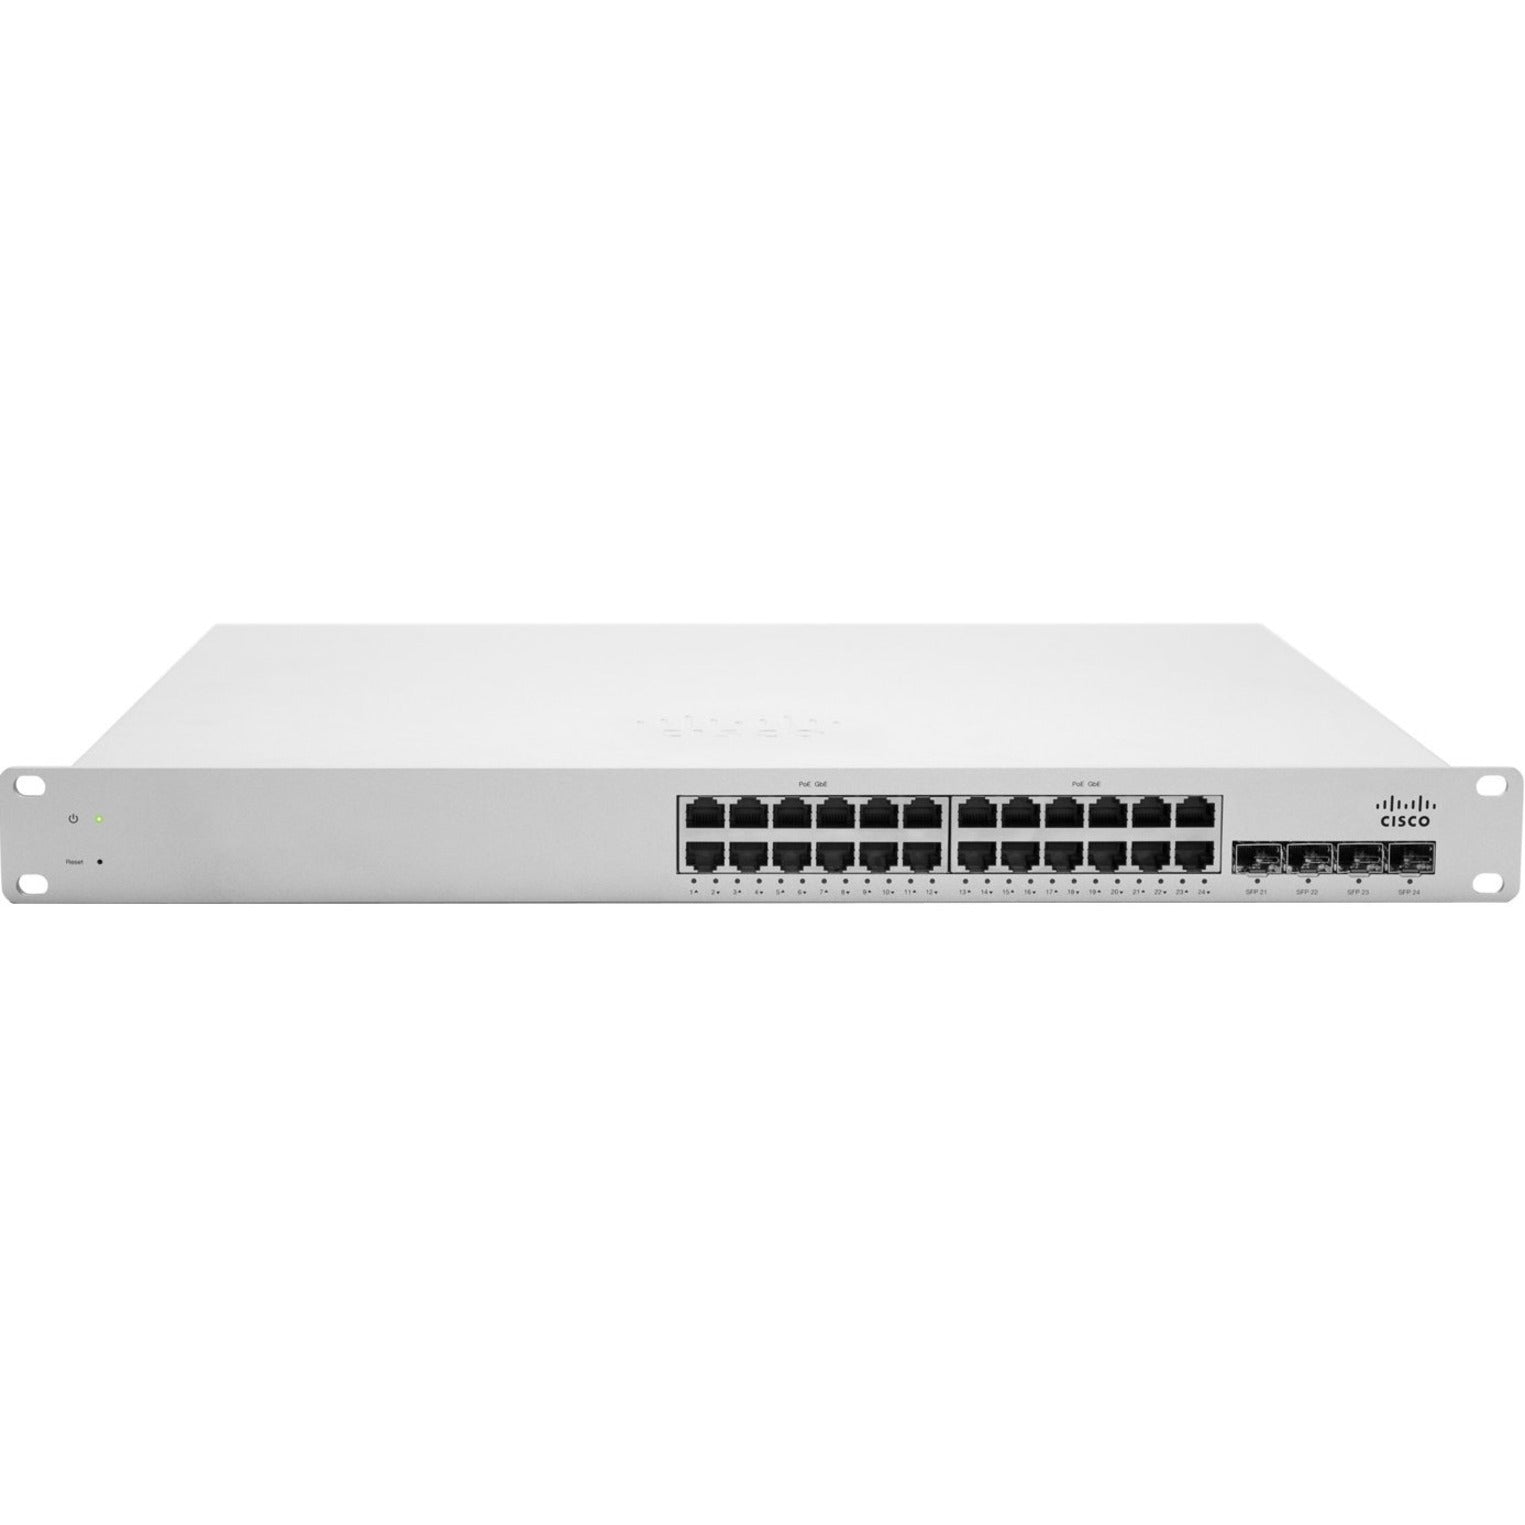 Meraki MS220-24 L2 Cloud Managed 24 Port GigE Switch (MS220-24-HW)